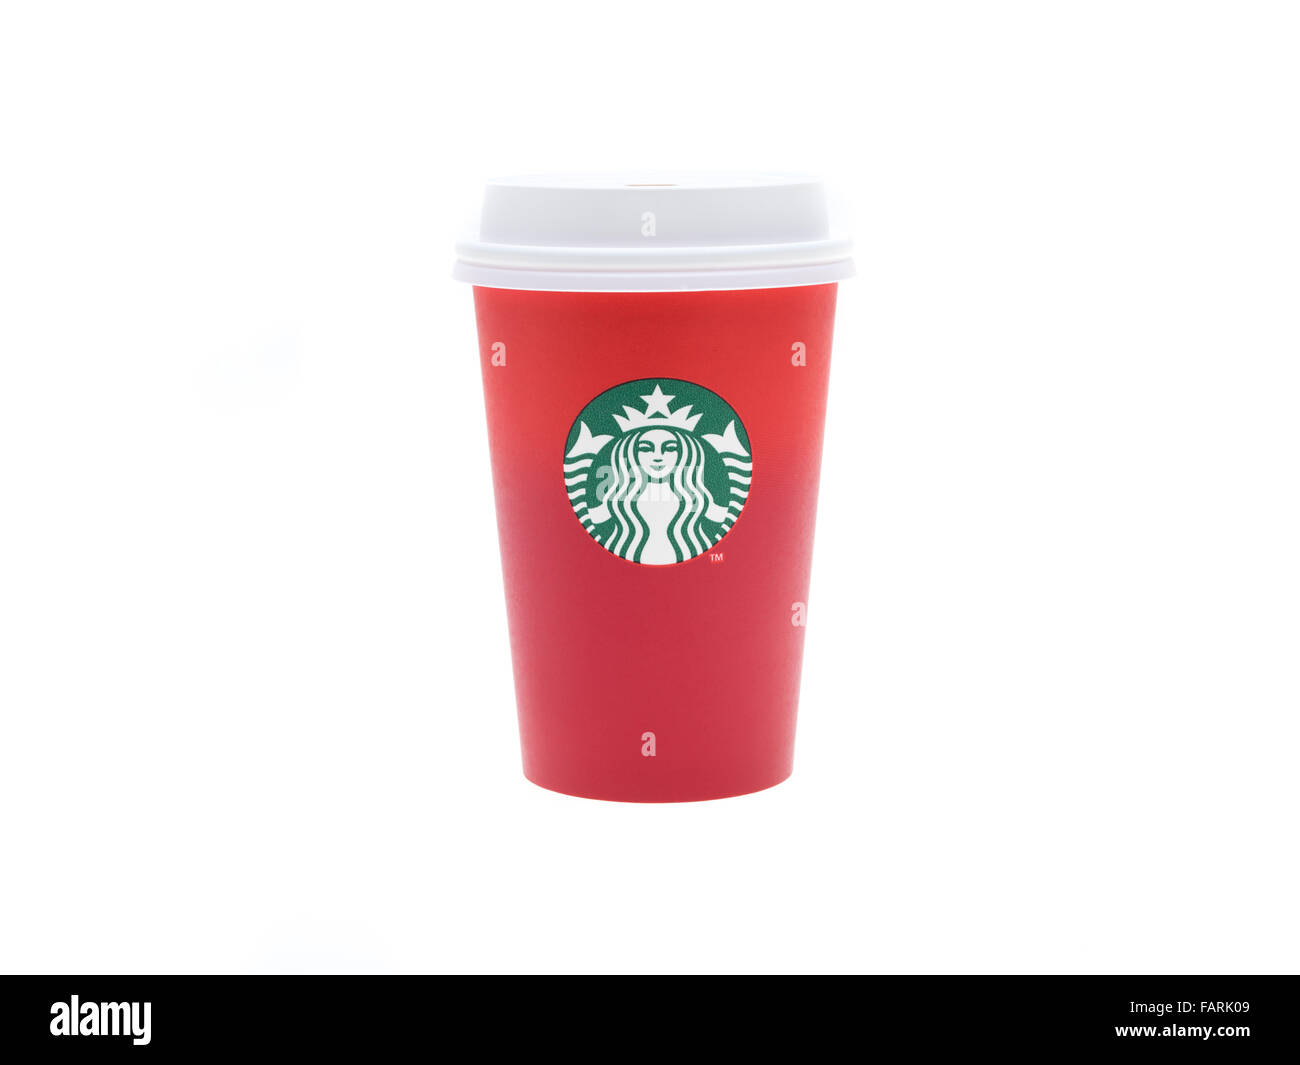 Starbucks Navidad 2015 rojo taza de café desechables. Foto de stock